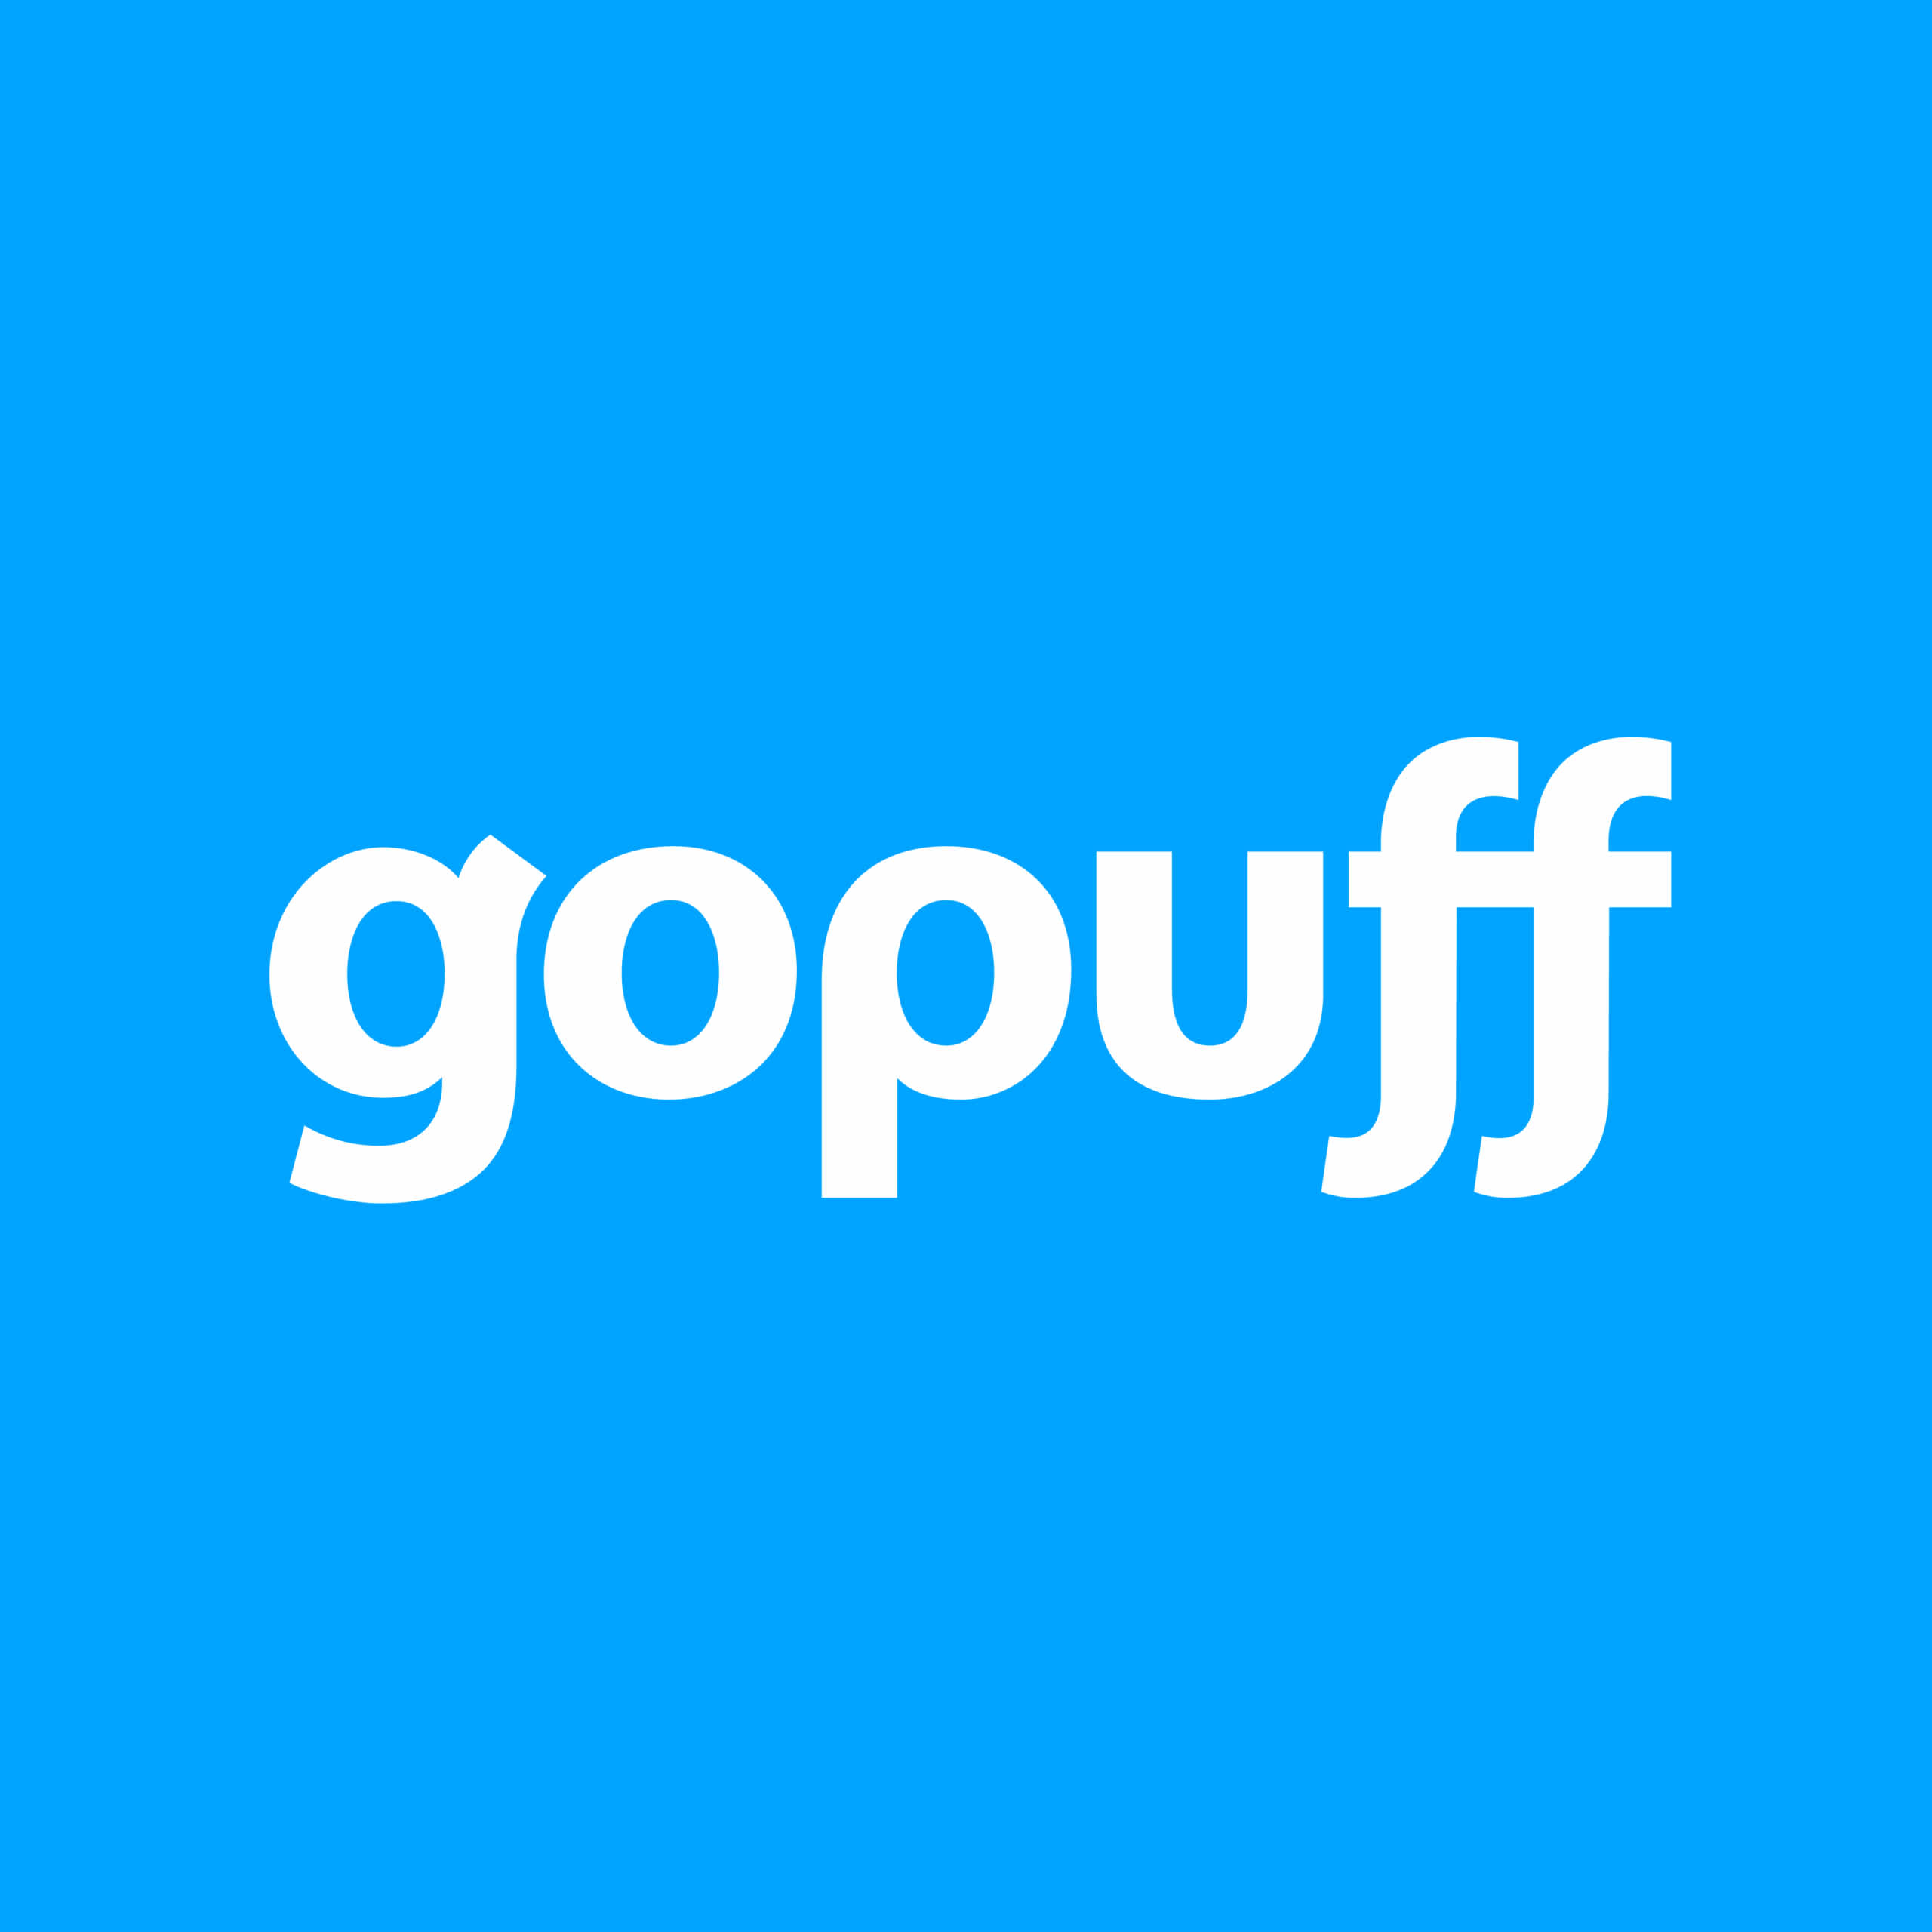 Gopuff’s New Look